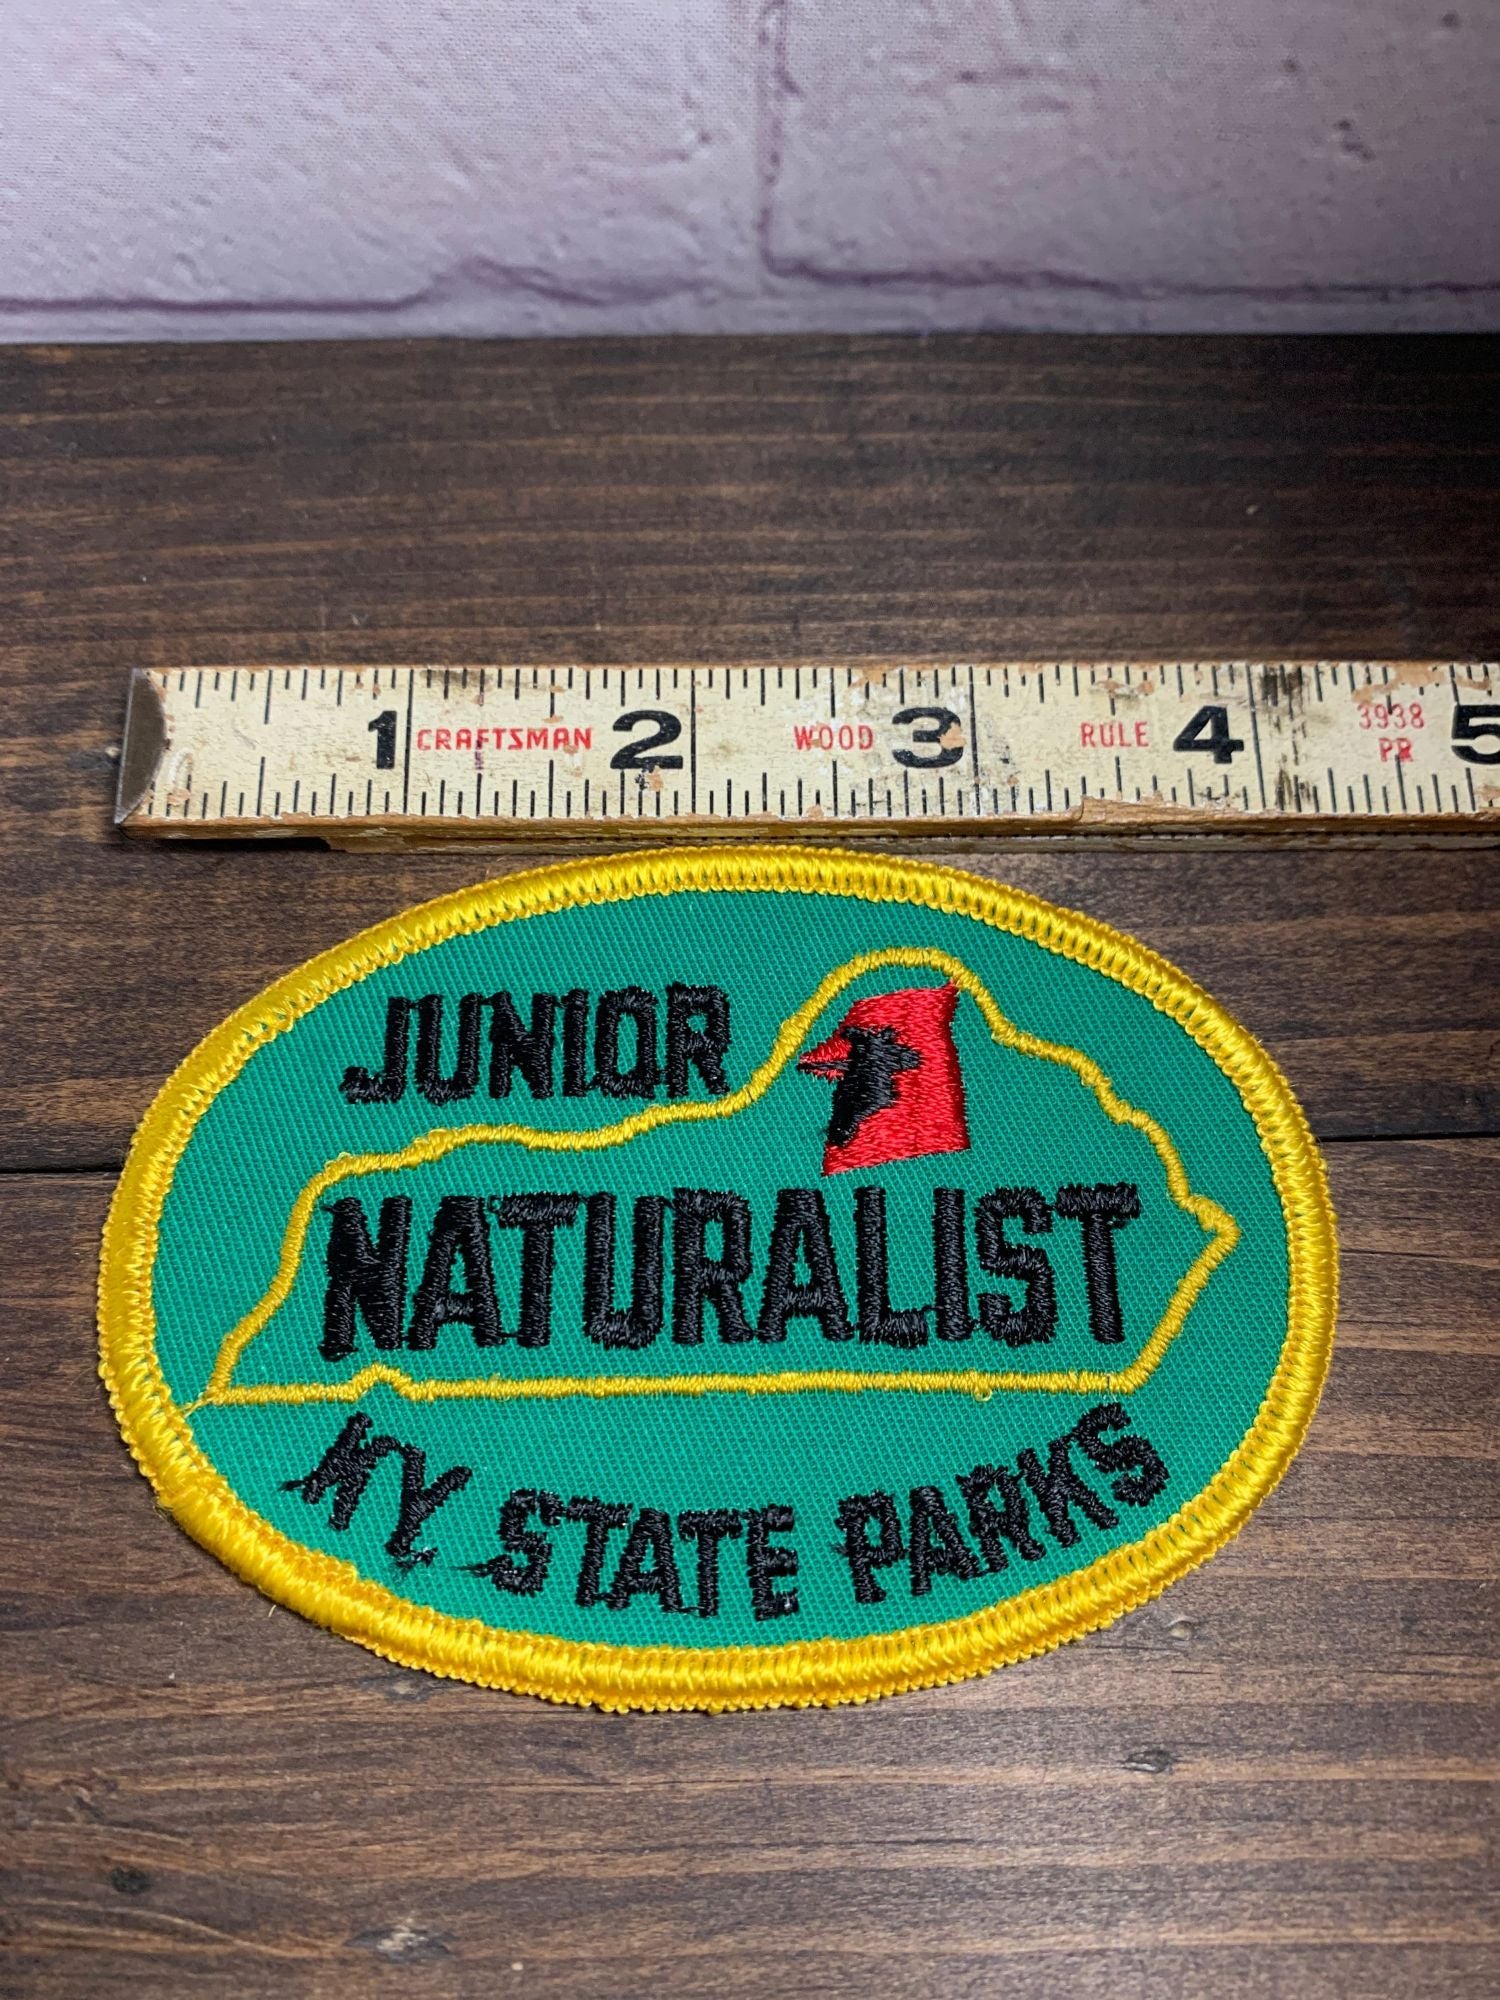 Junior Naturalist KY State Parks Patch, Cardinal, 4”